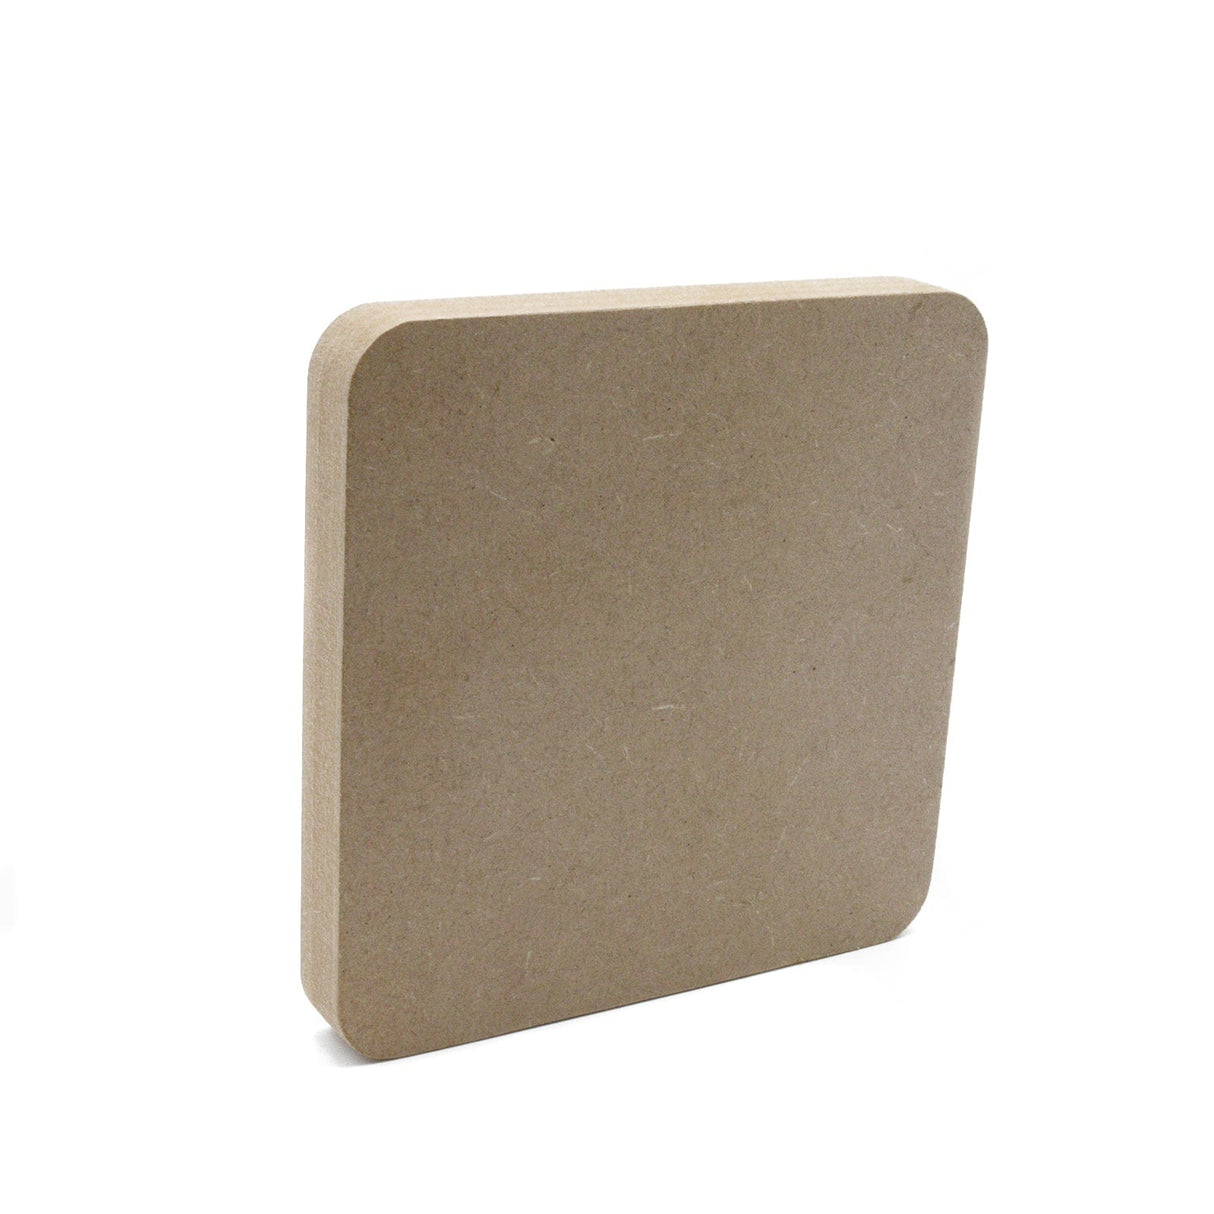 Freestanding Square Shapes, 18mm Thick Wooden MDF Blanks - Laserworksuk